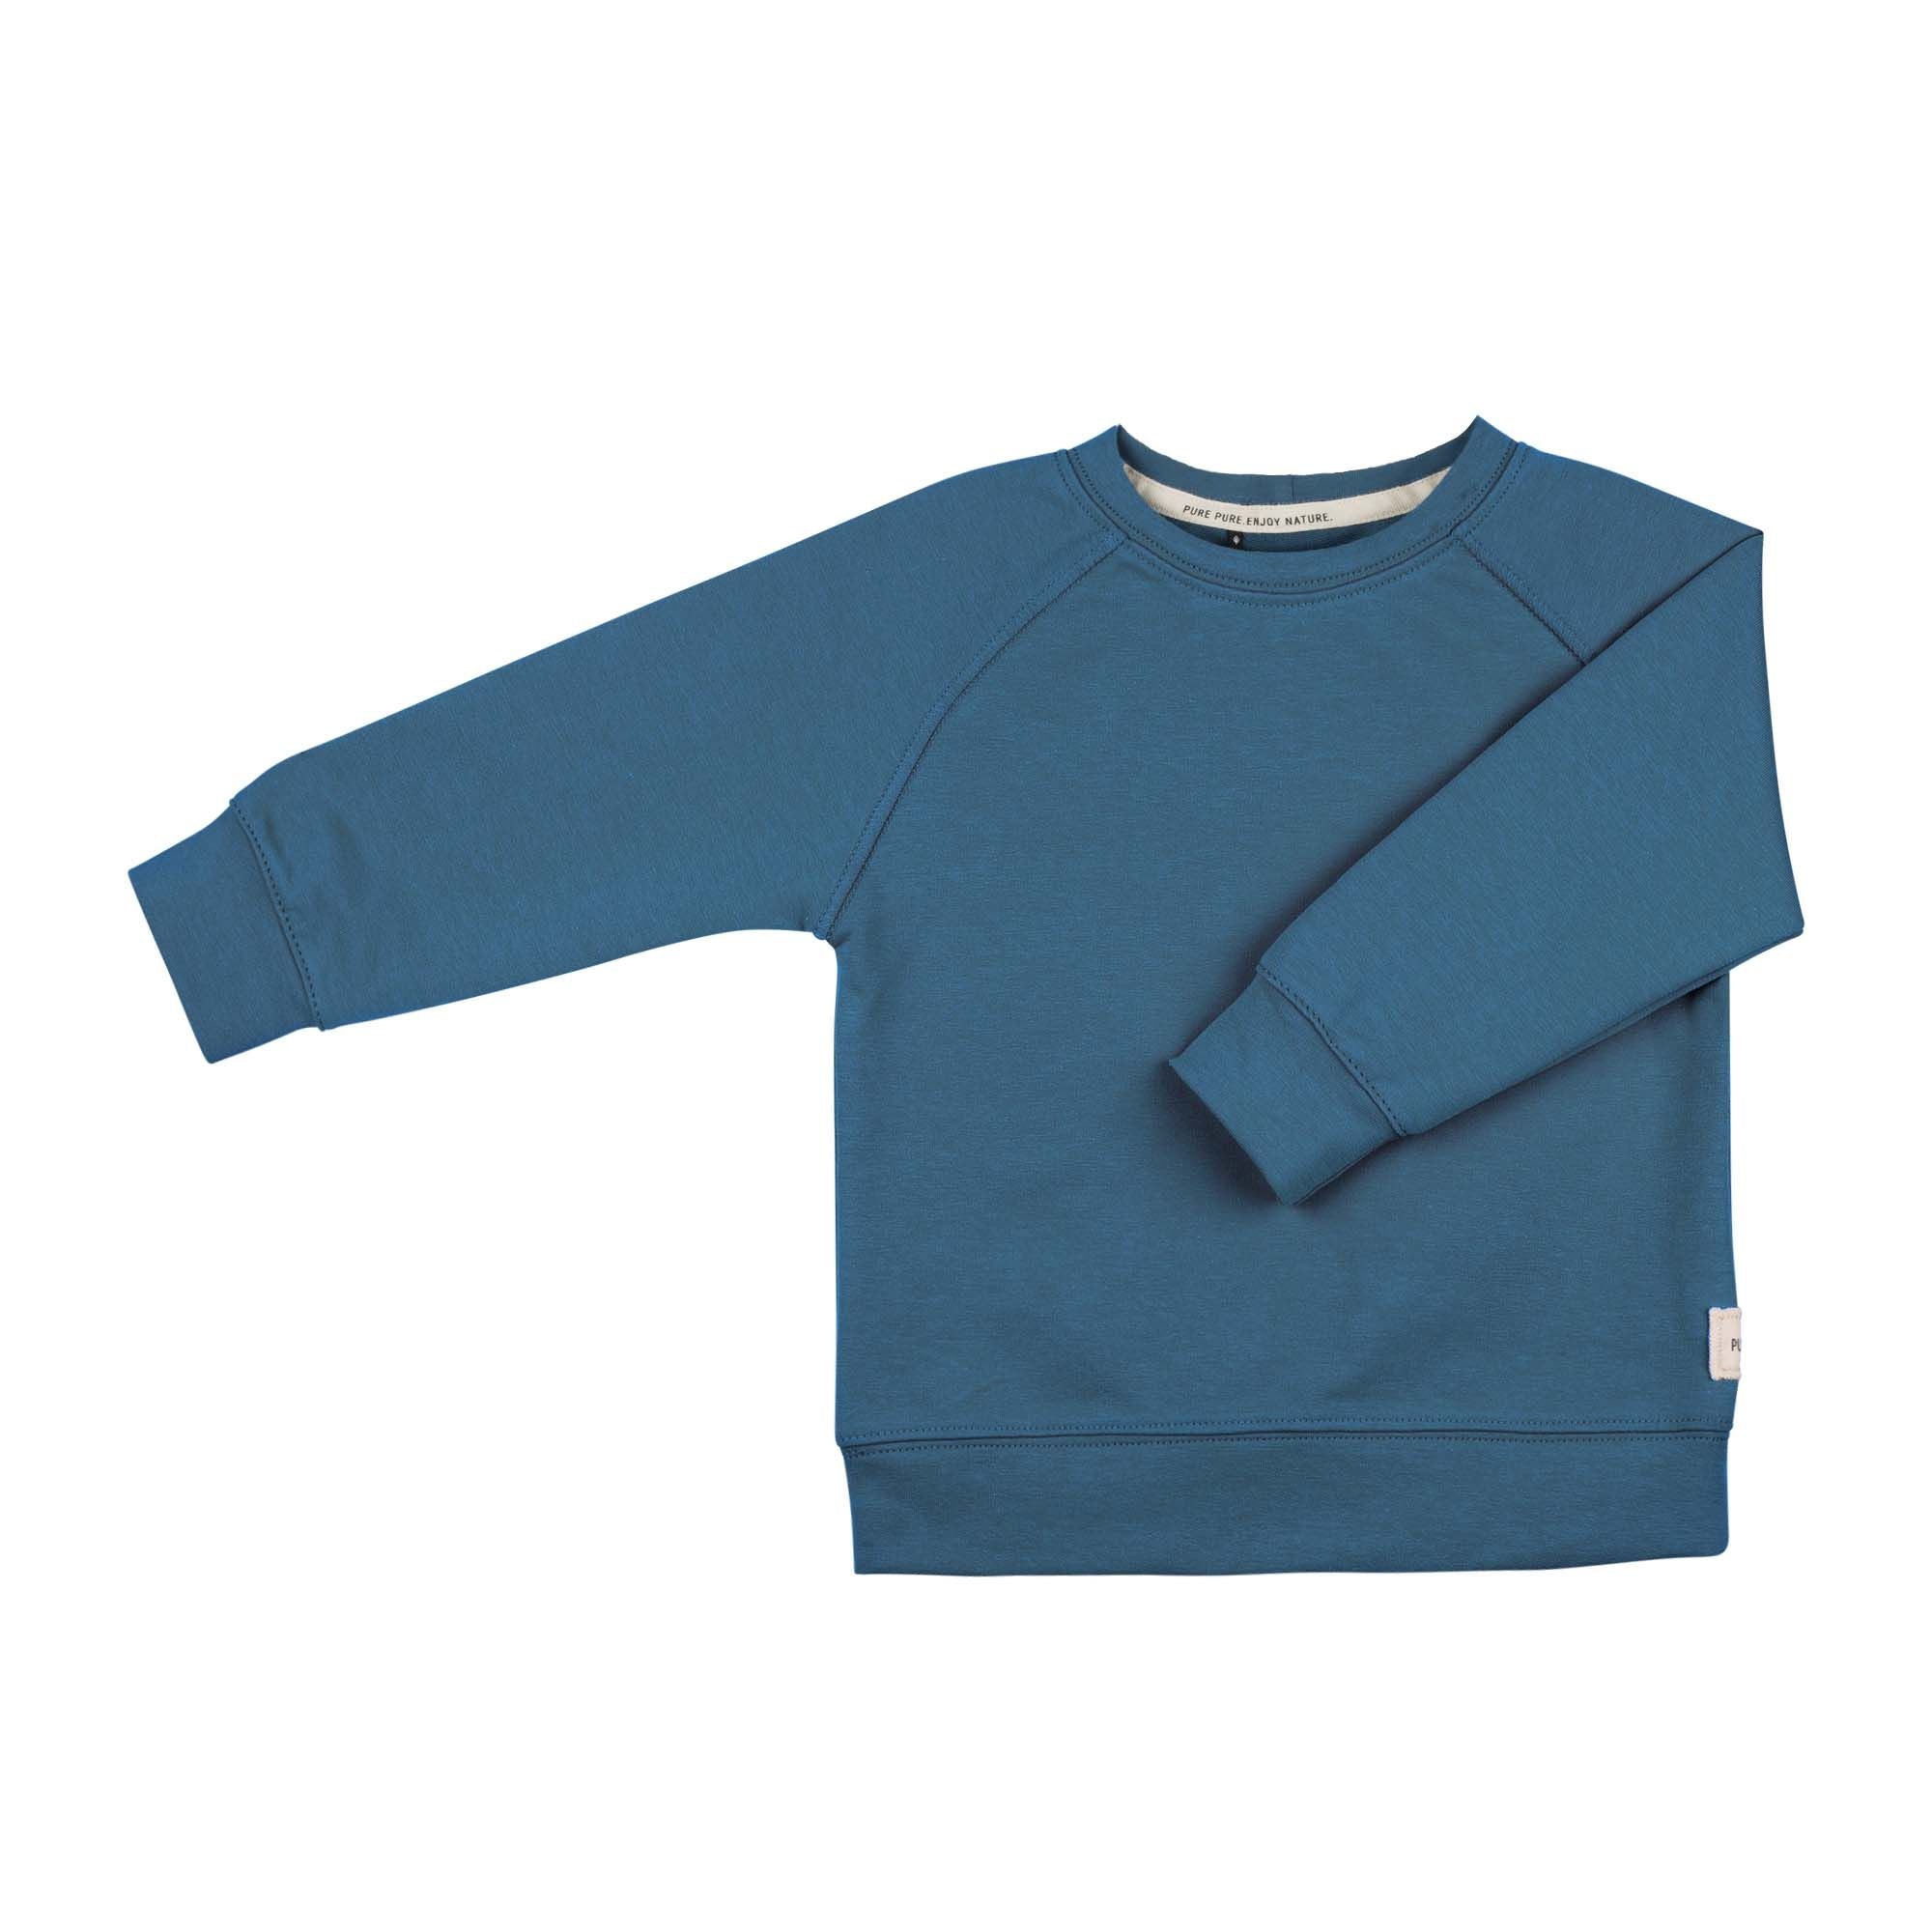 Pure Pure - Kinder Shirt aus Biobaumwolle in blau